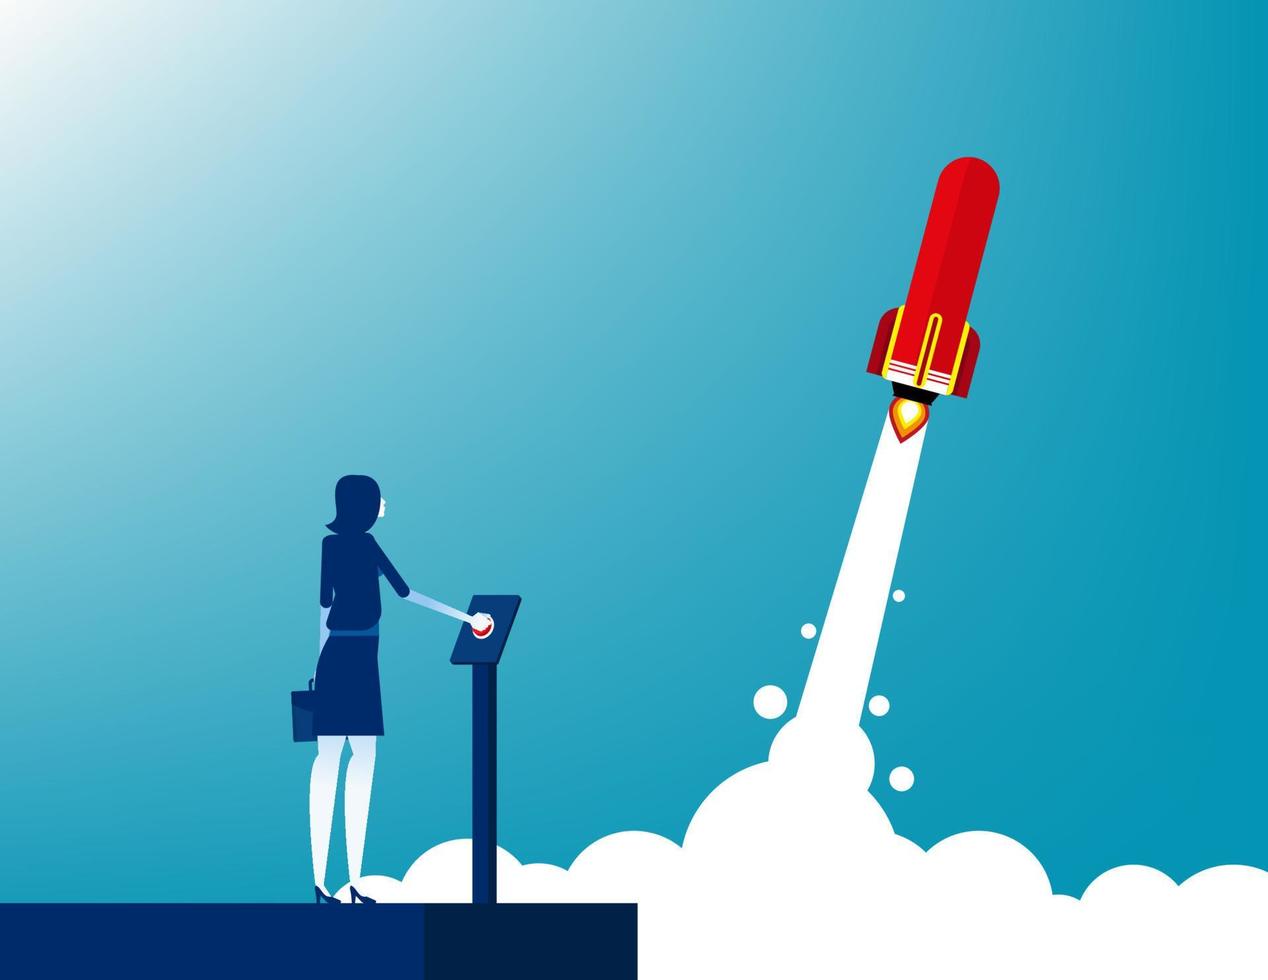 empresaria lanza cohete. ilustración de vector de inicio de negocio de concepto, éxito, logro.